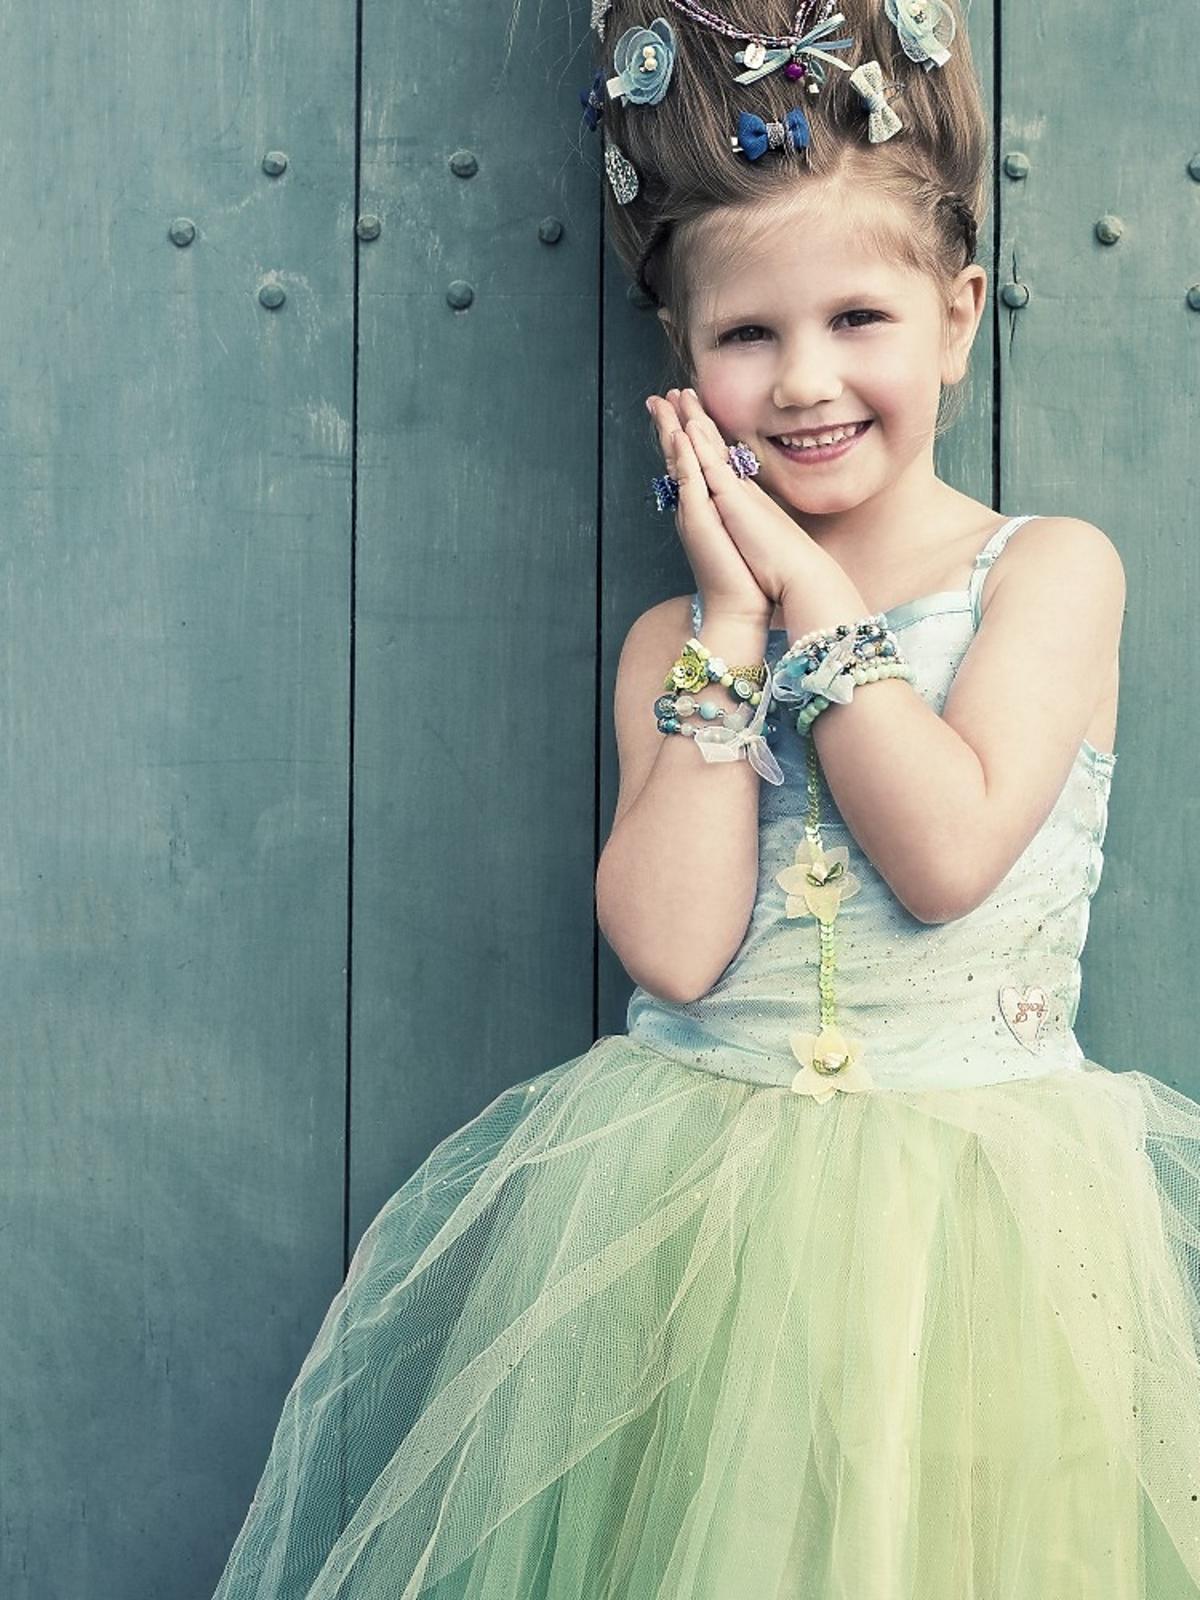 souza-girls-fairy-dress-up-costume50euro-children-com.jpg